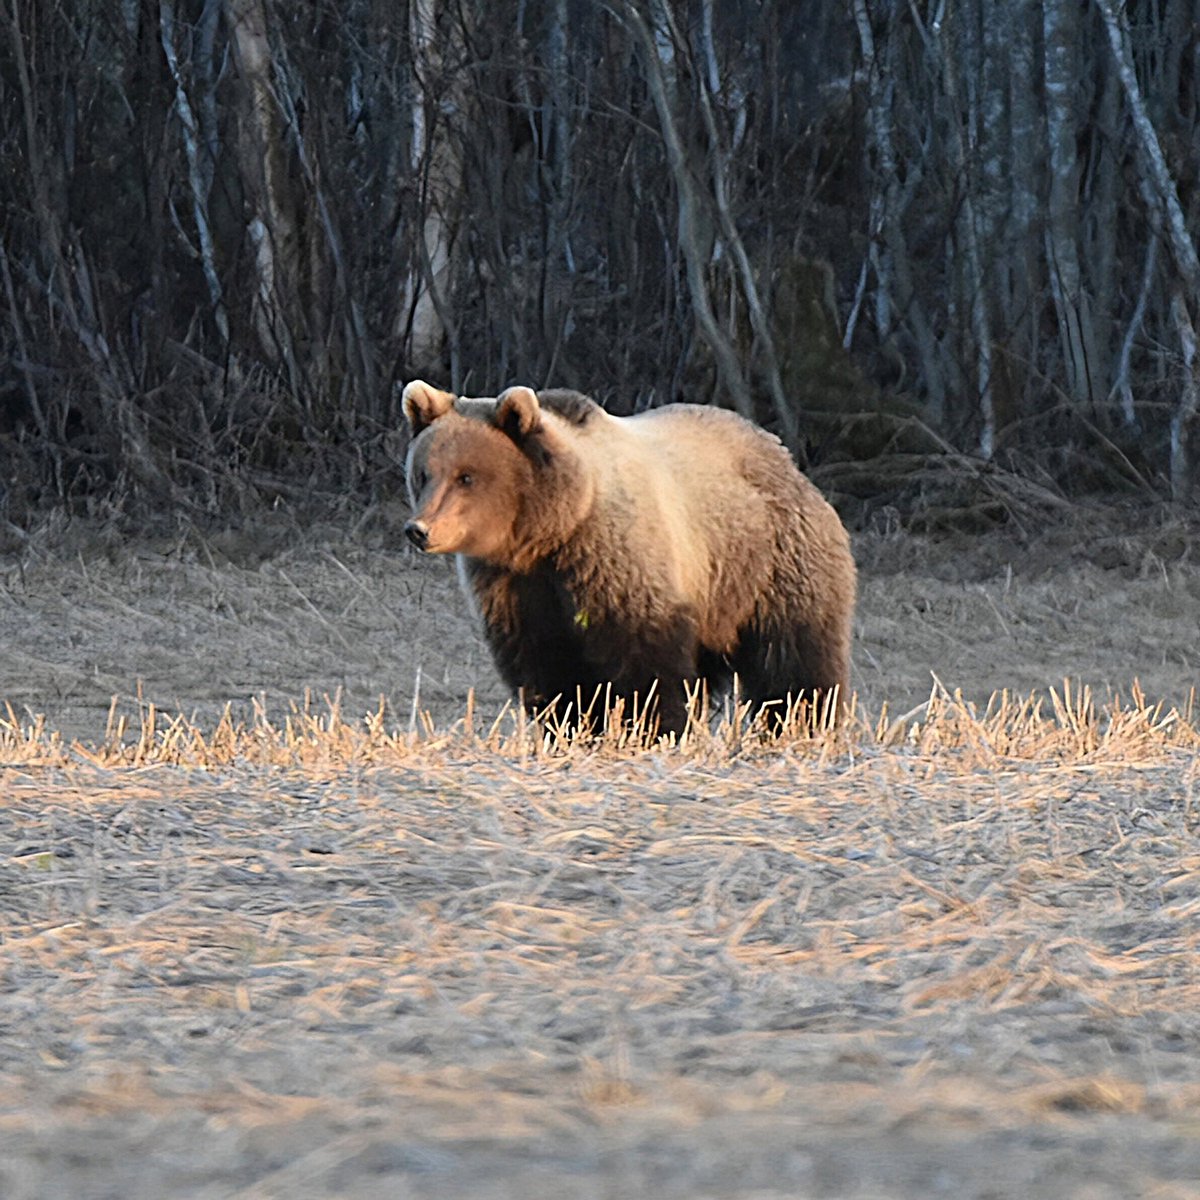 #Nature #Naturelovers #NaturePhotography #WildlifePhotographer #Sweden #Hälsingland #Swedishnature #björn #bear #brownbear